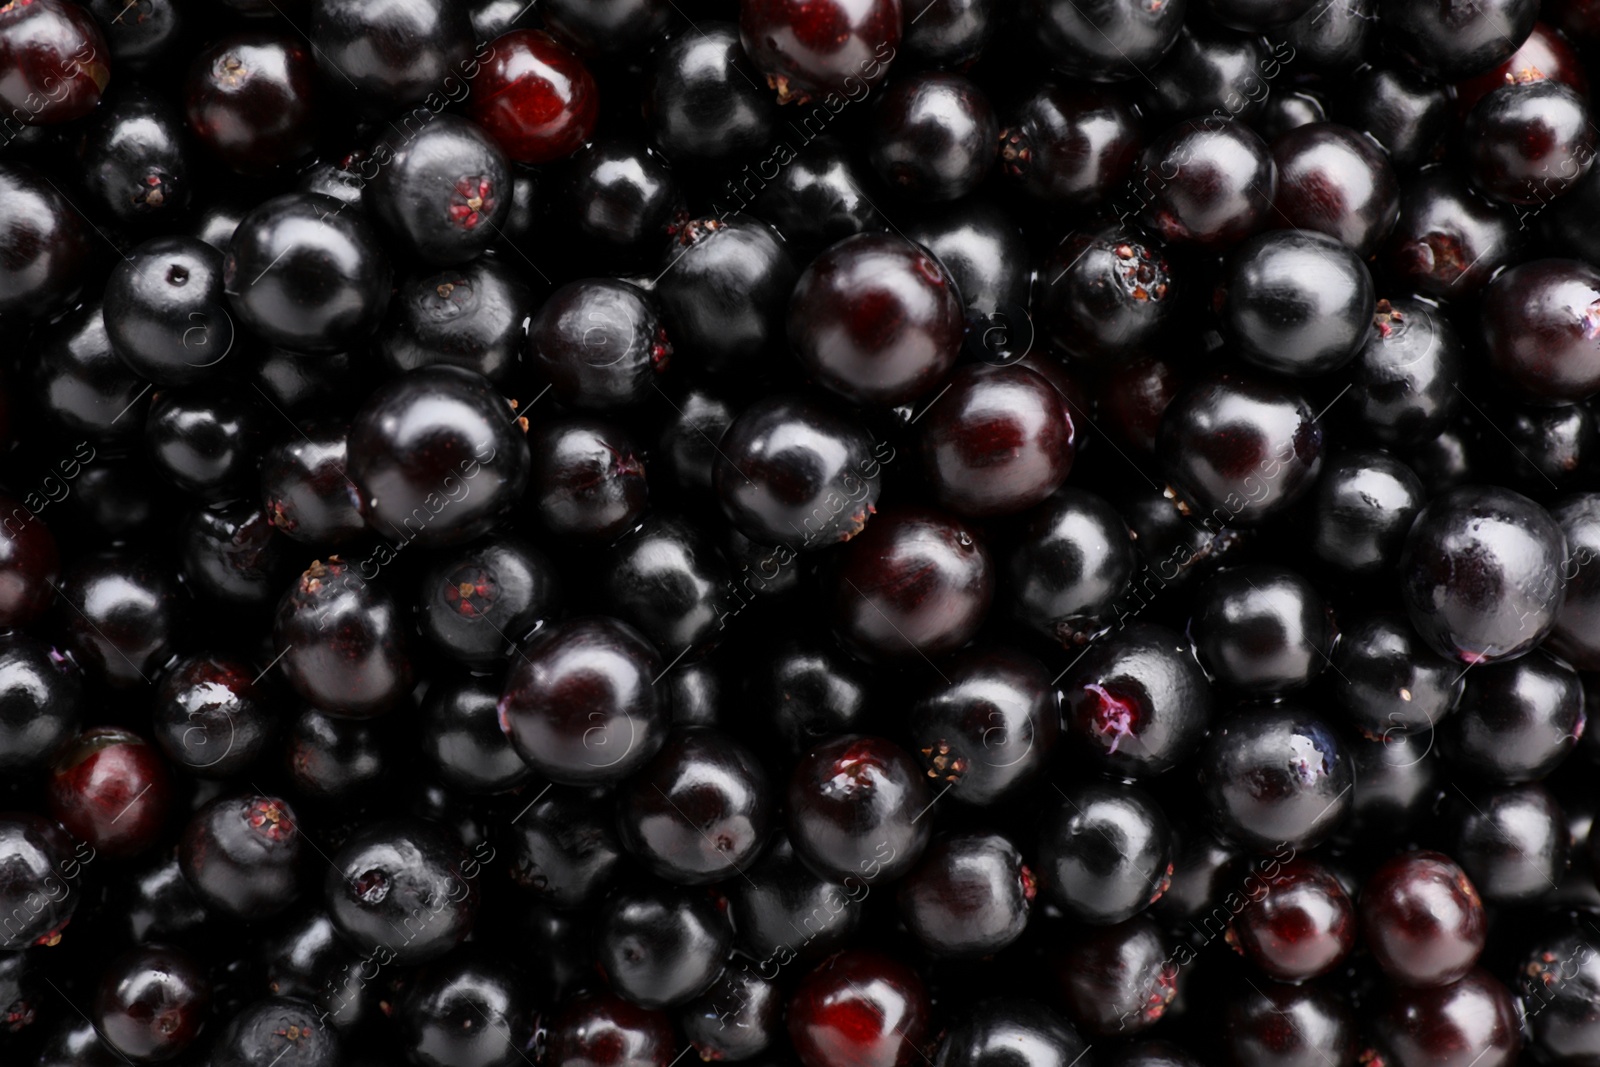 Photo of Black elderberries (Sambucus) as background, top view